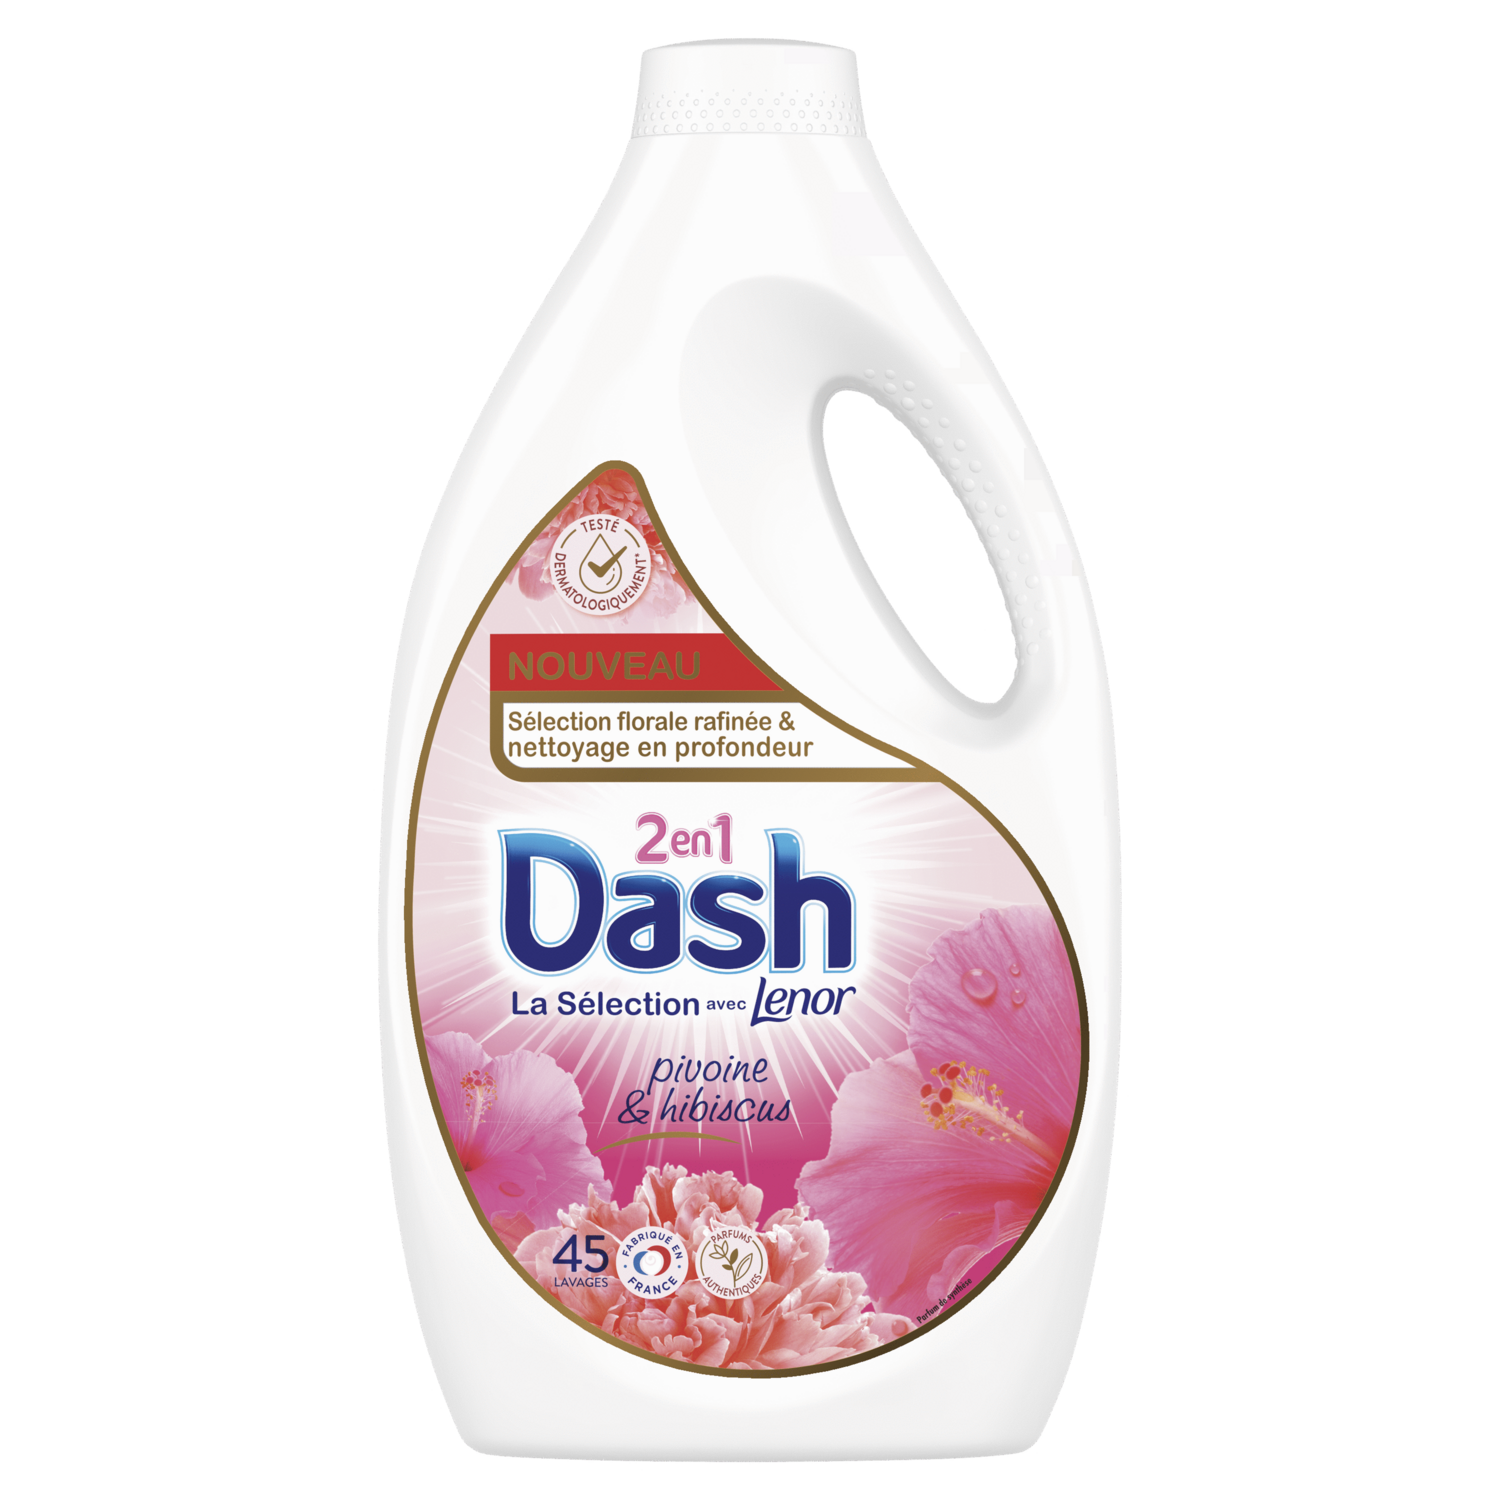 Dash 2en1 Lessive Liquide 5x40 Lavages, Pivoine et Hibiscus